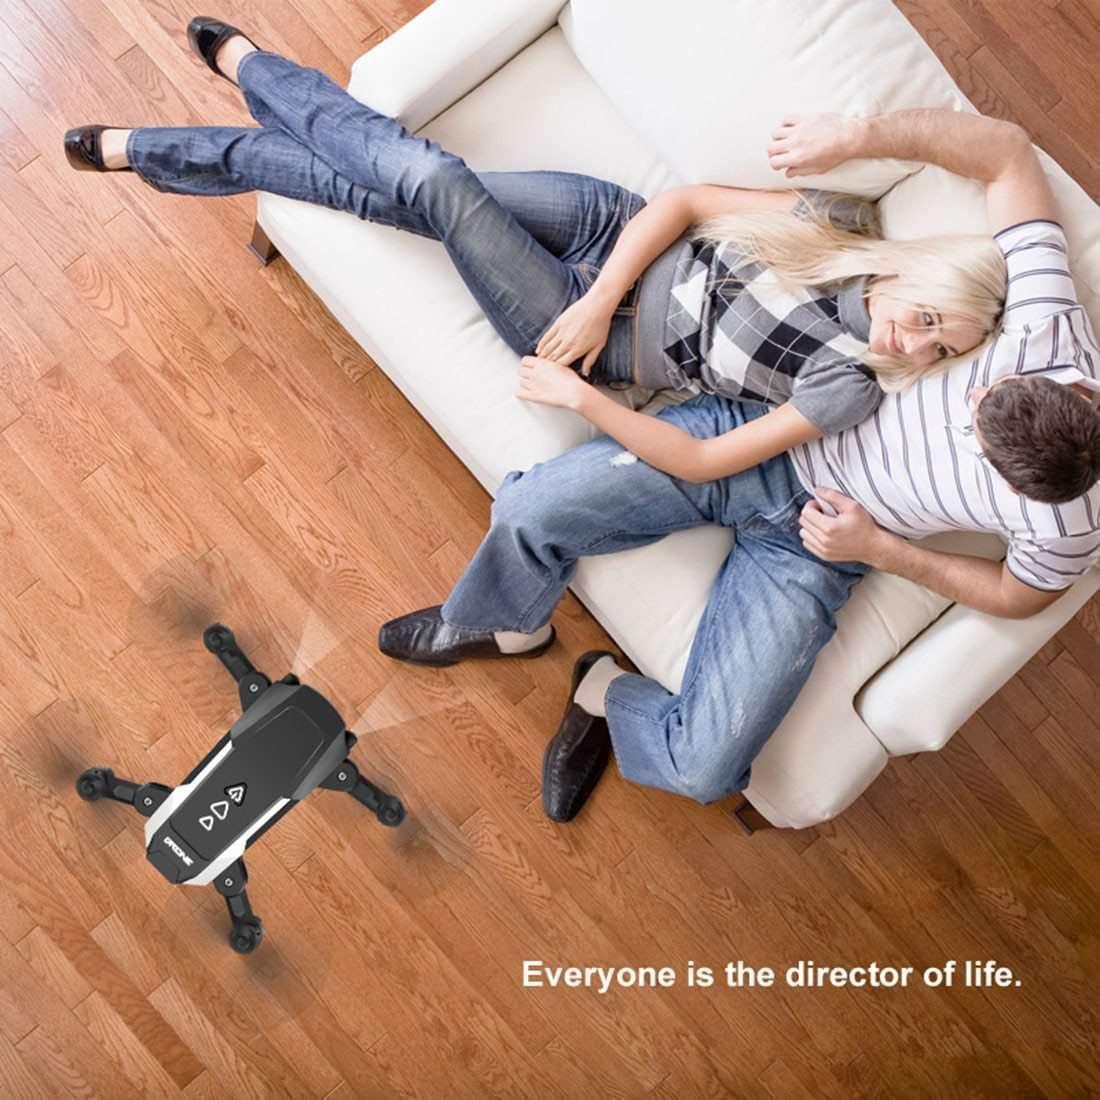 FLY ZANG 2.0 ® - Mini Drone com Camera 1080p + Case - Mega Market